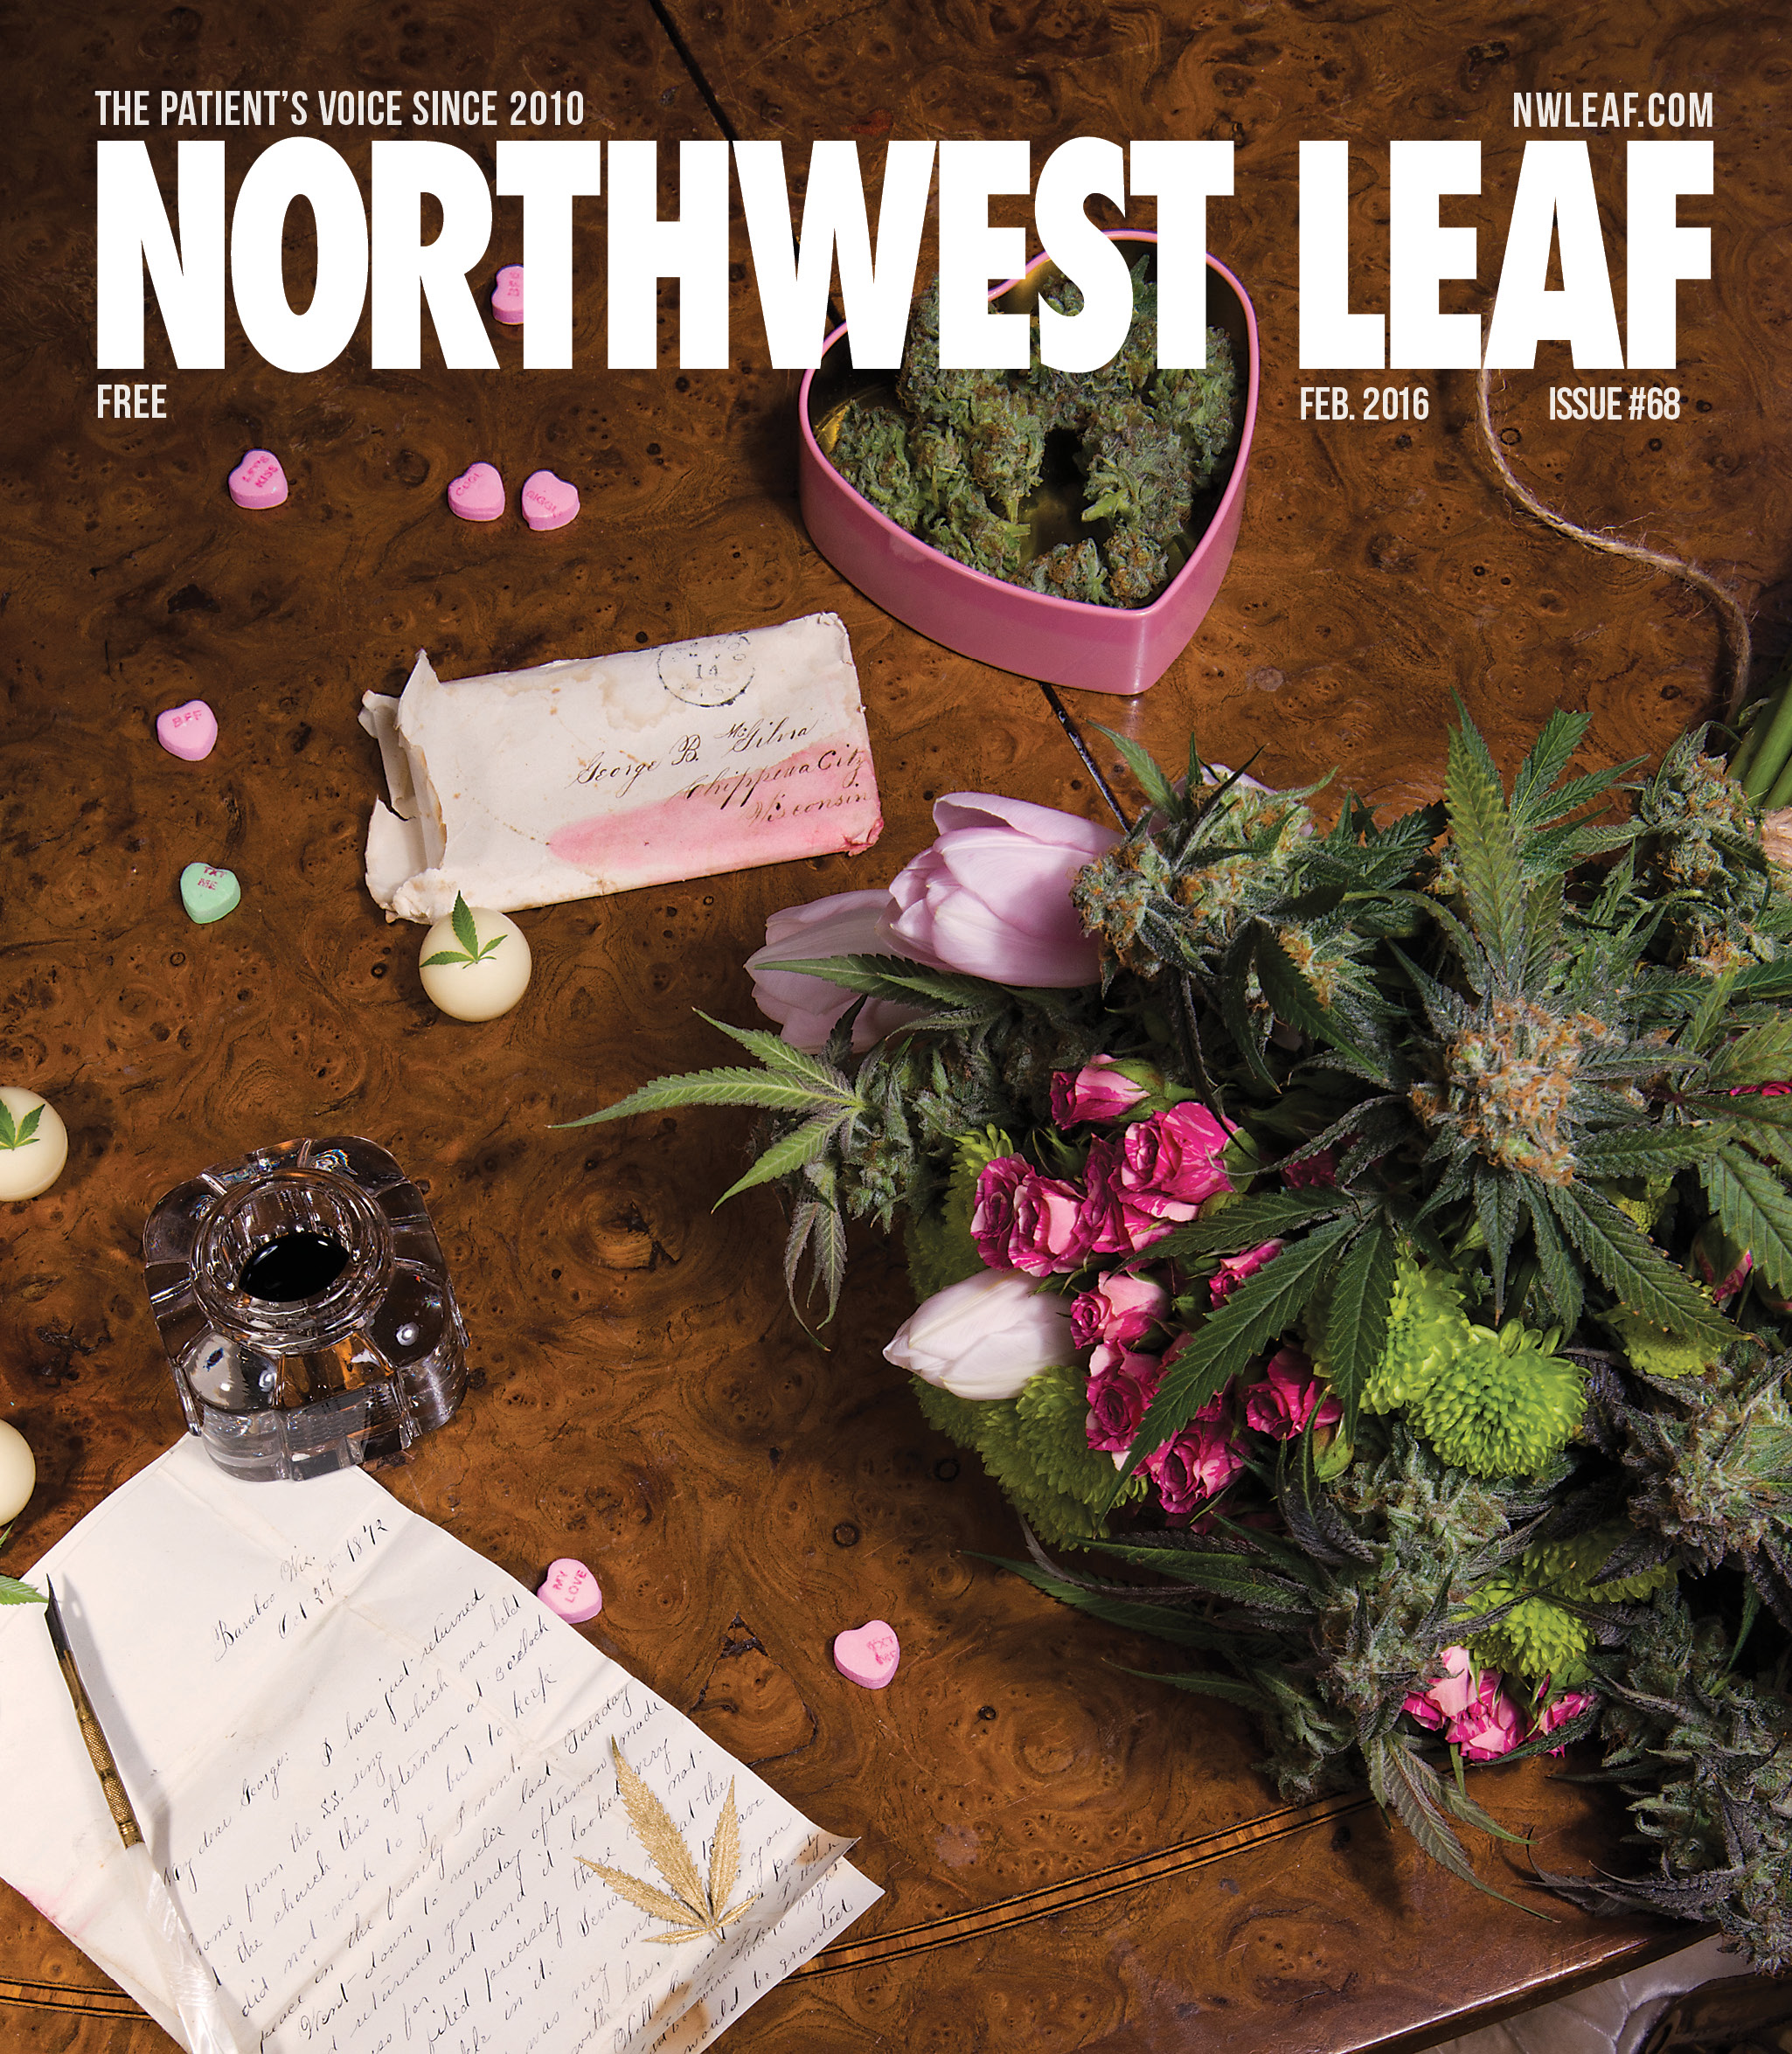 NorthwestLeafFeb2016cover.jpg